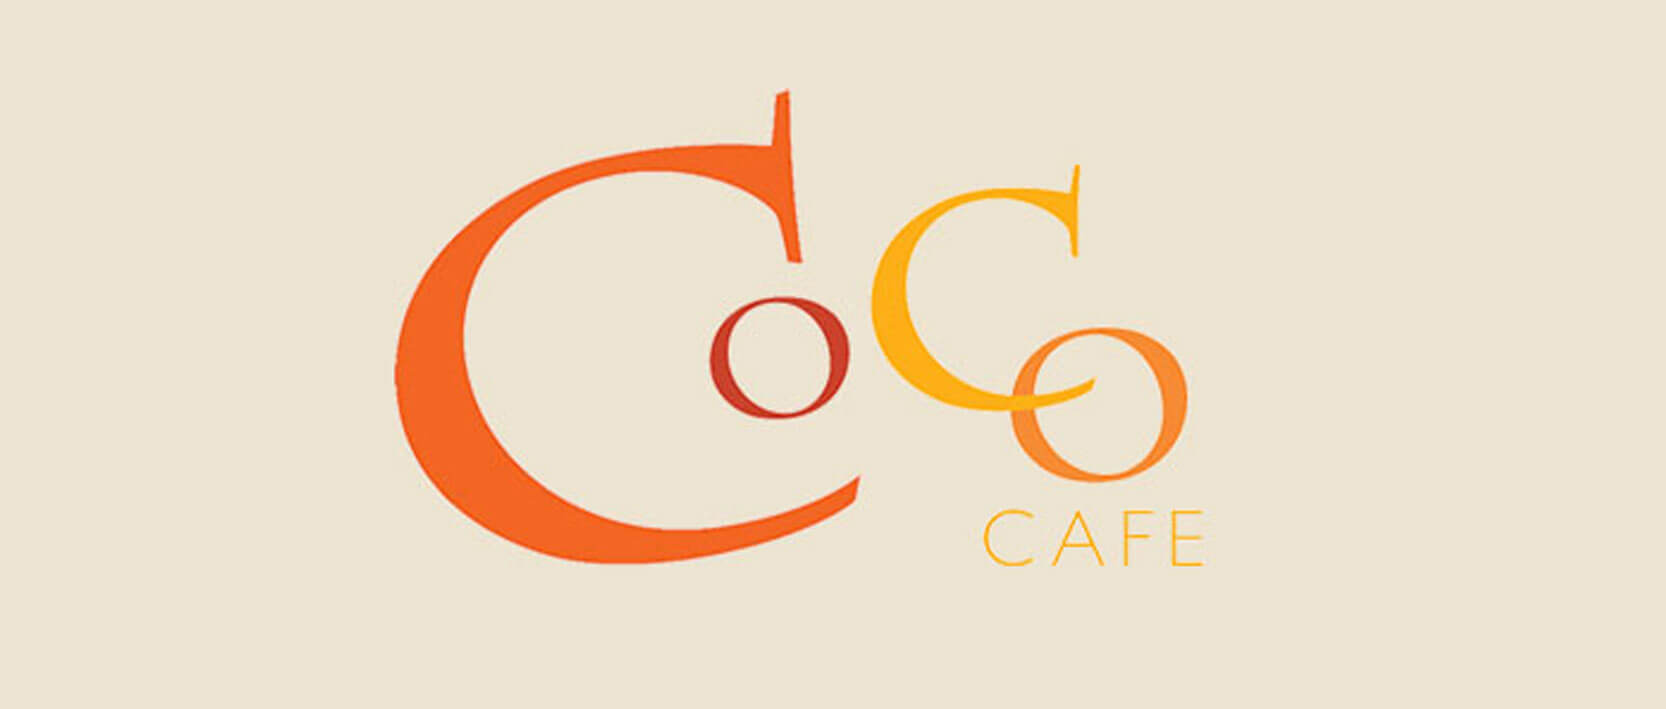 Dreams Huatulco Resort Restaurants and Bars - Coco Cafe